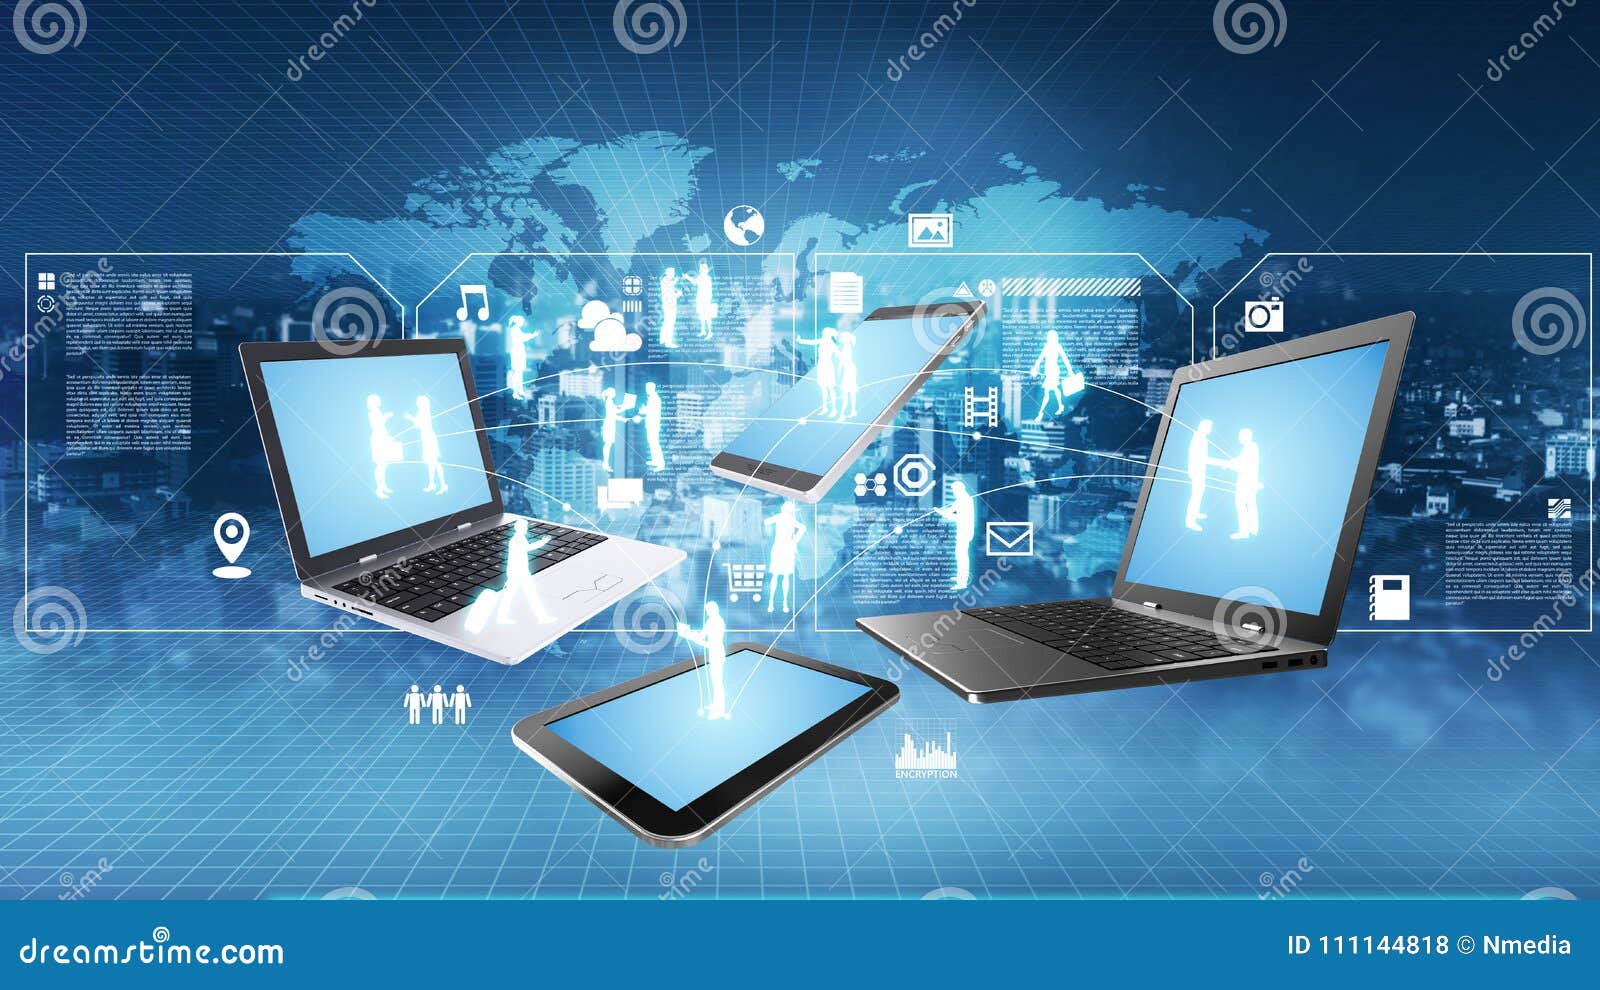 internet information technology concept